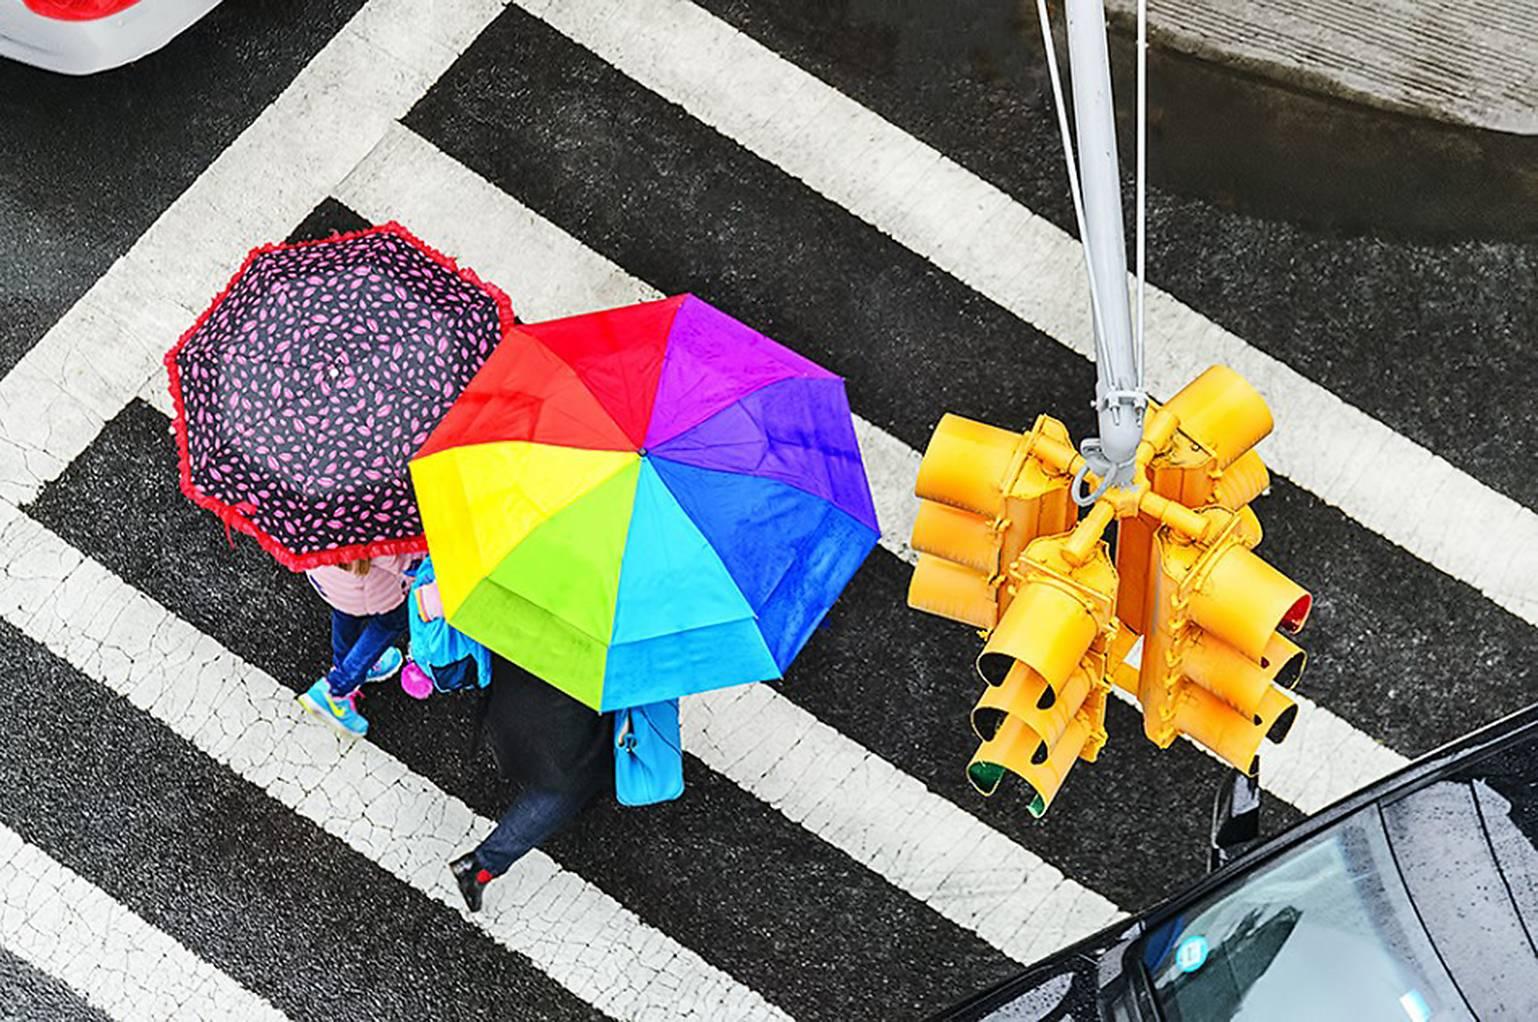 Mitchell Funk Landscape Photograph - Umbrellas in New York Rain 